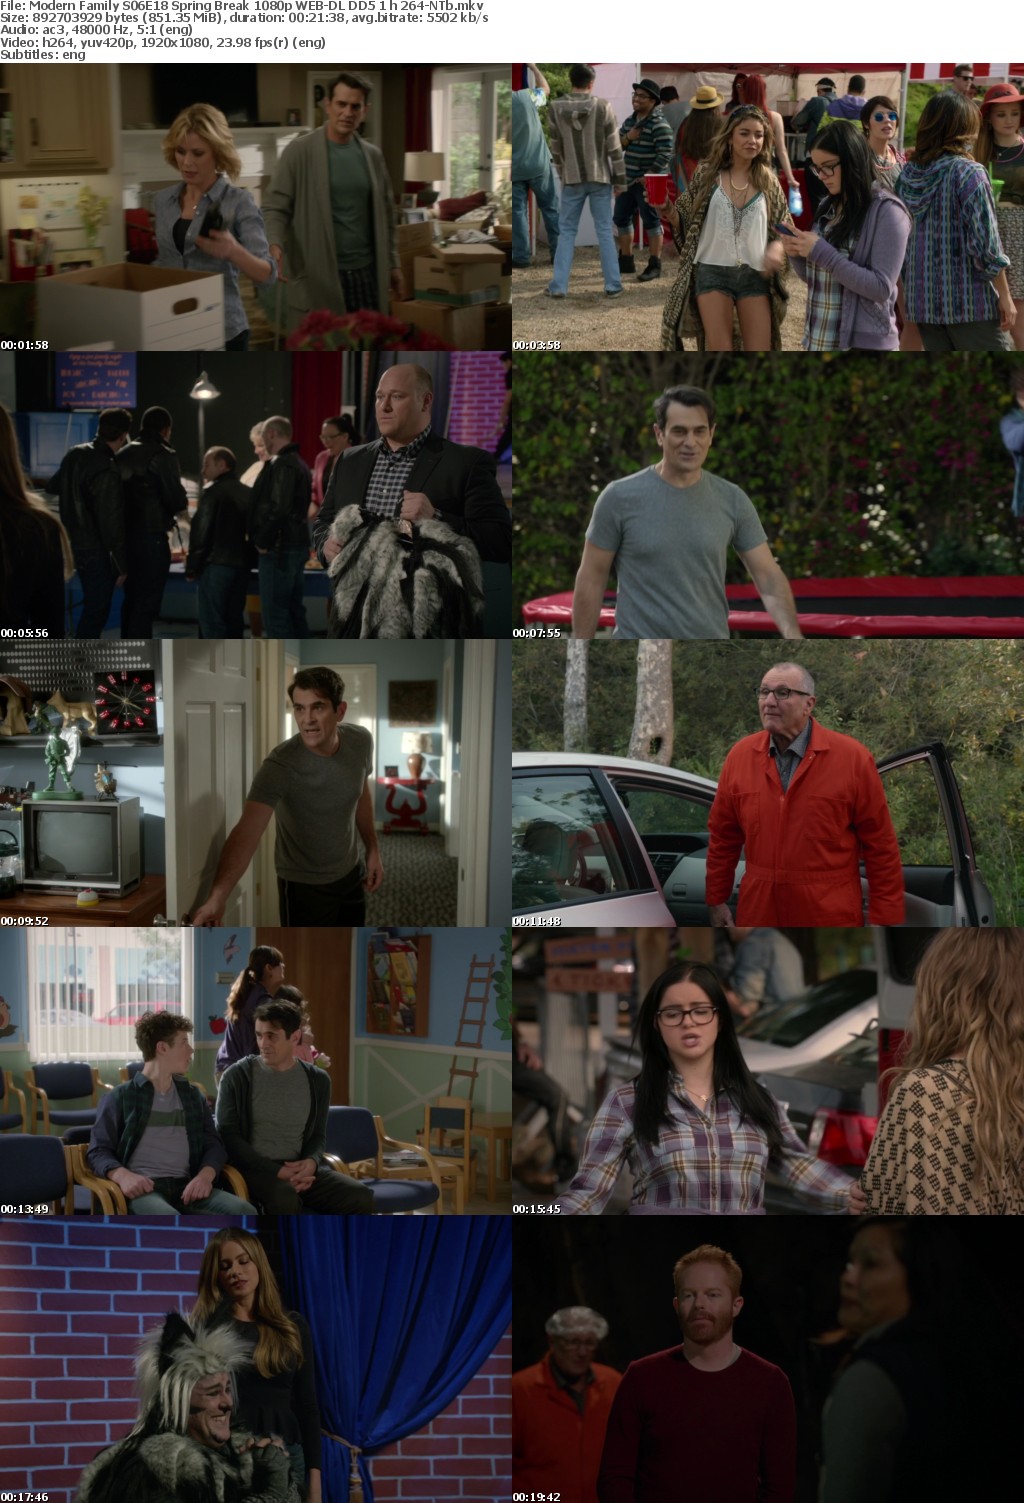 Modern Family S06E18 Spring Break 1080p WEB-DL DD5 1 h 264-NTb